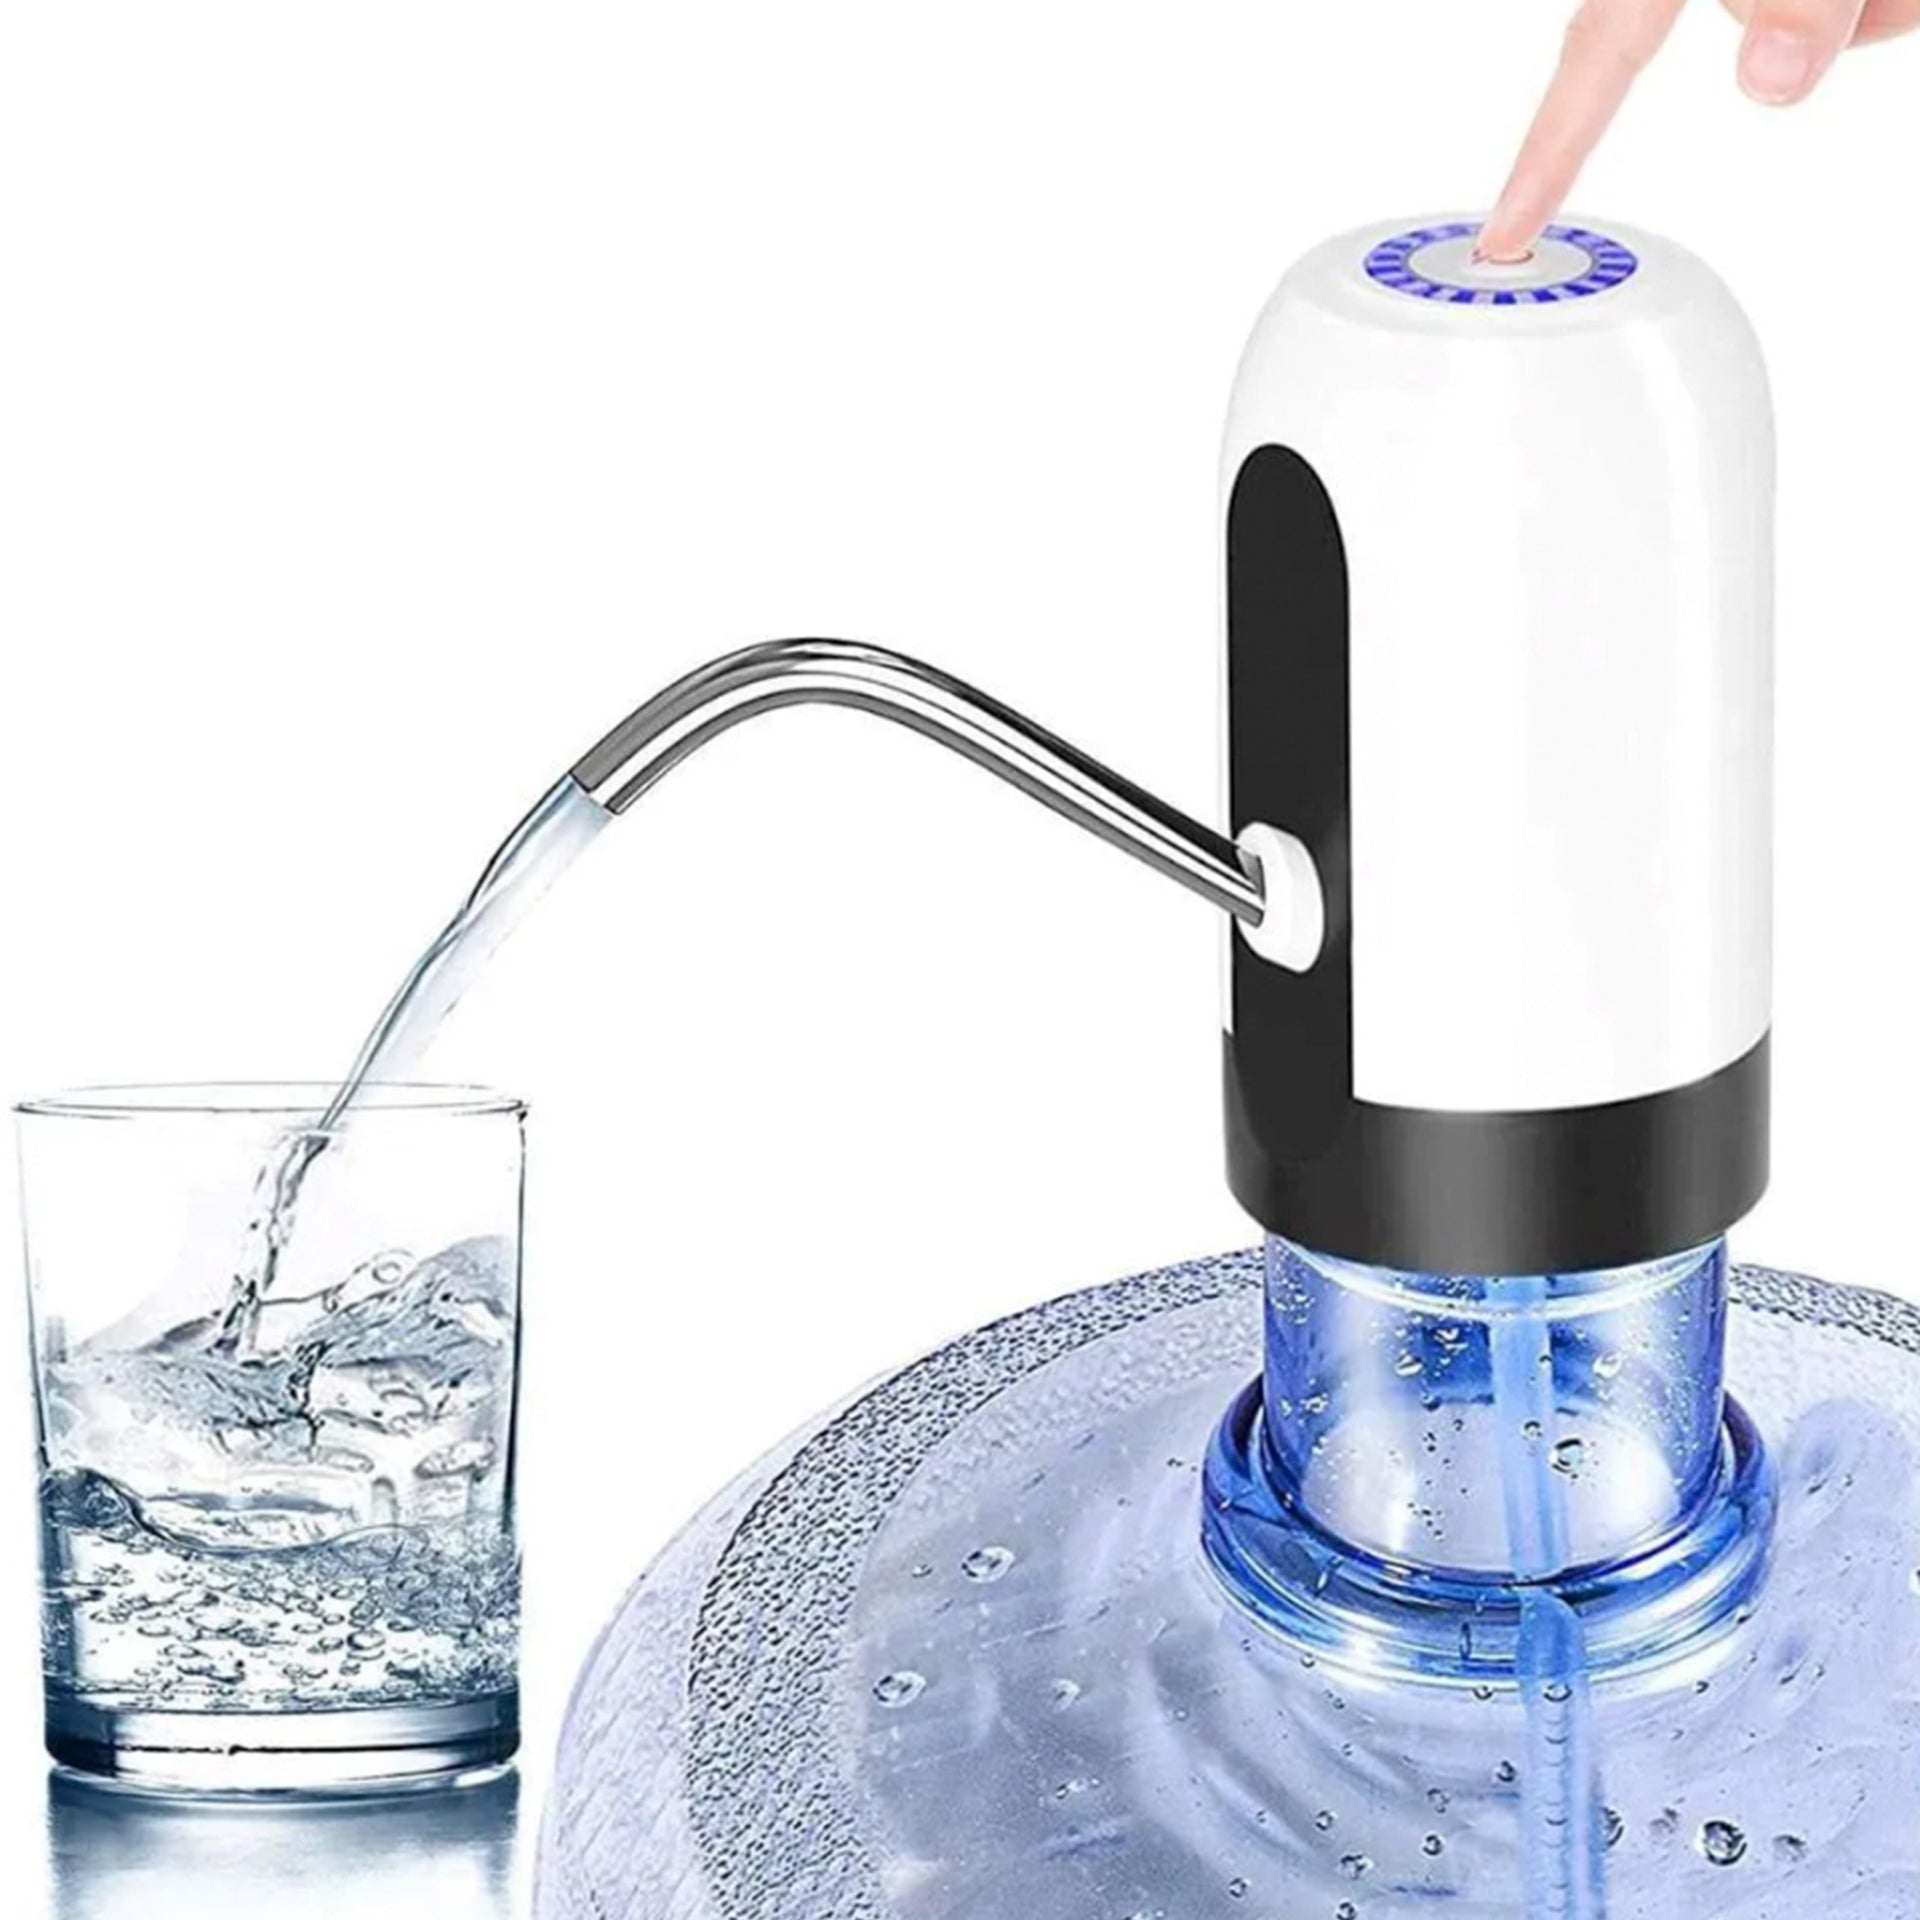 Dispensador de agua estilo bomba digital